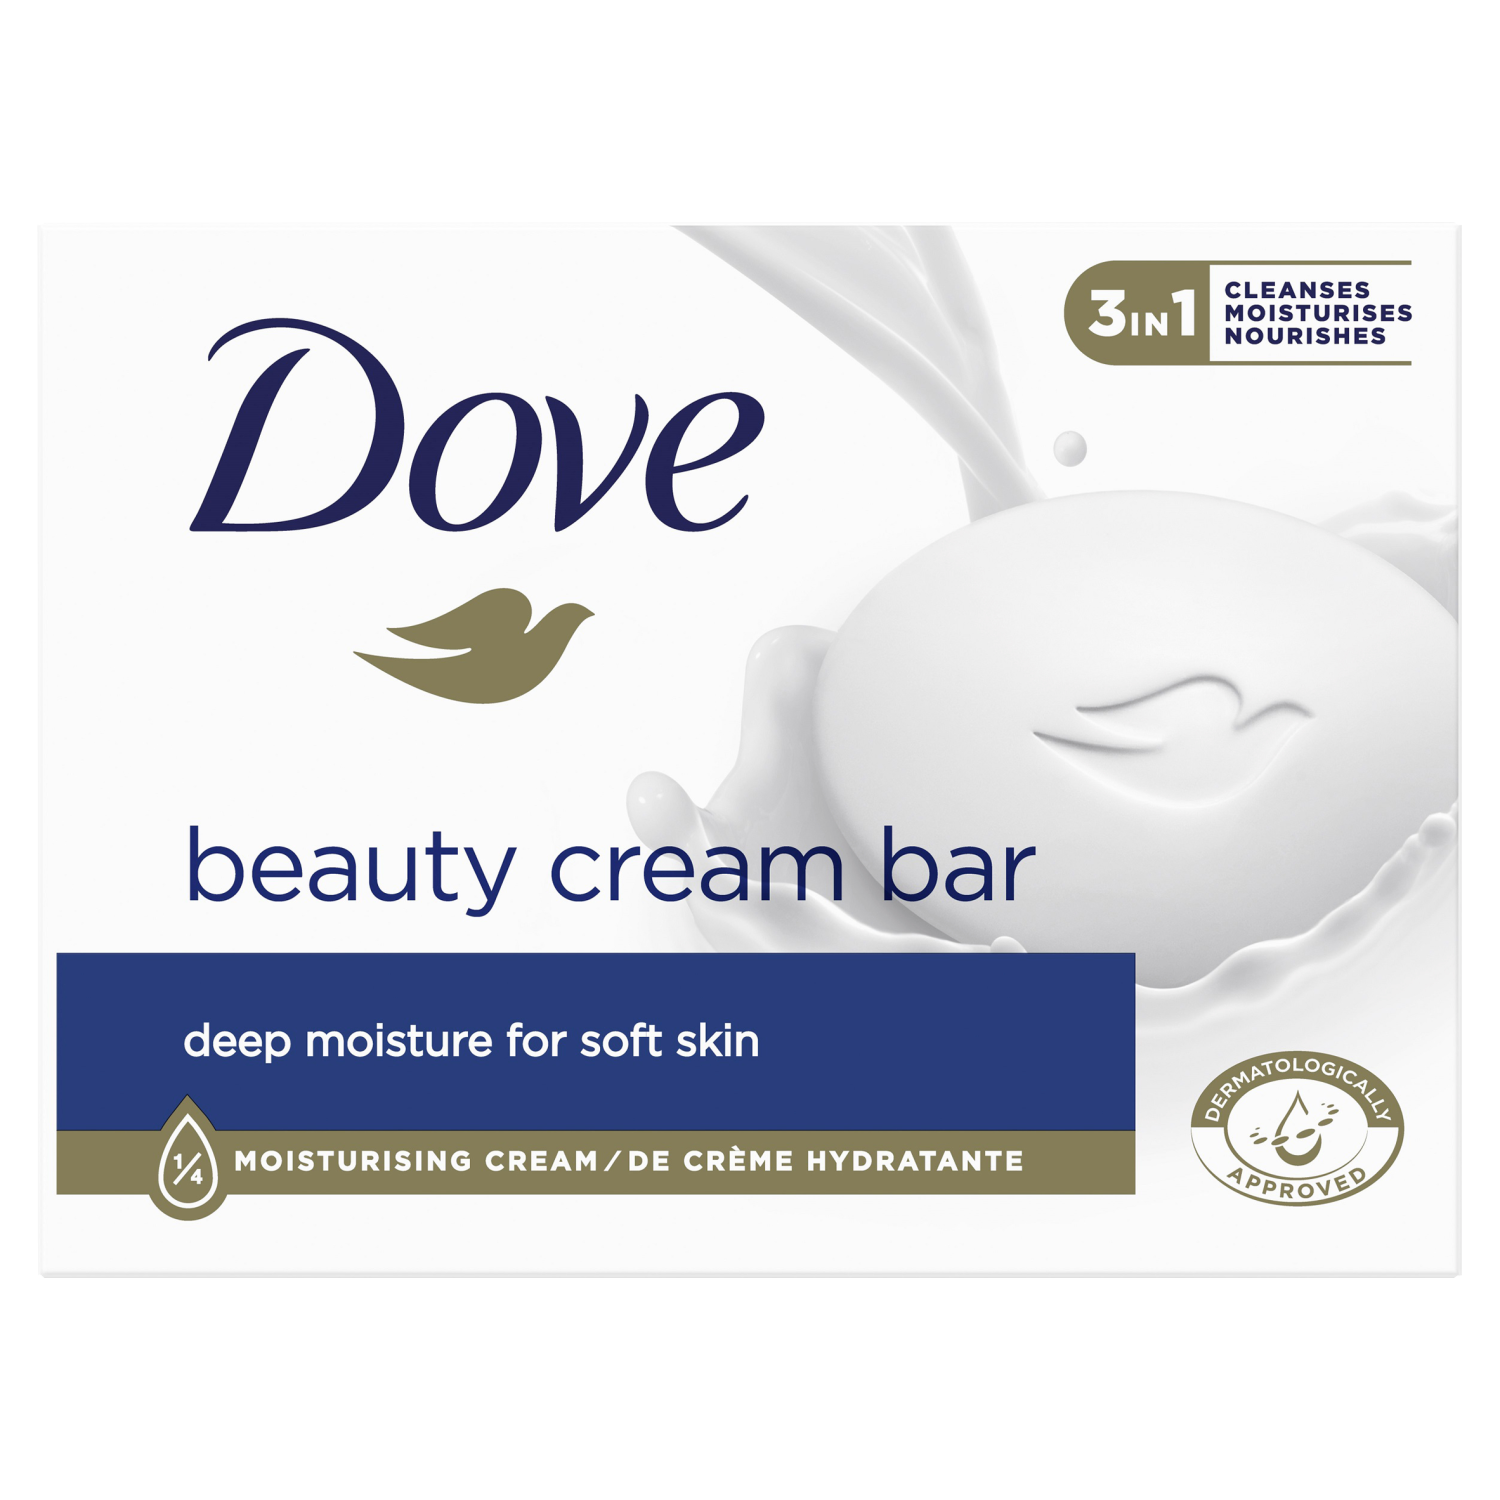 Dove Beauty Cream Bar твердое сливочное мыло, 90 г dove bar soap beauty cream white 4 7 oz 135 g